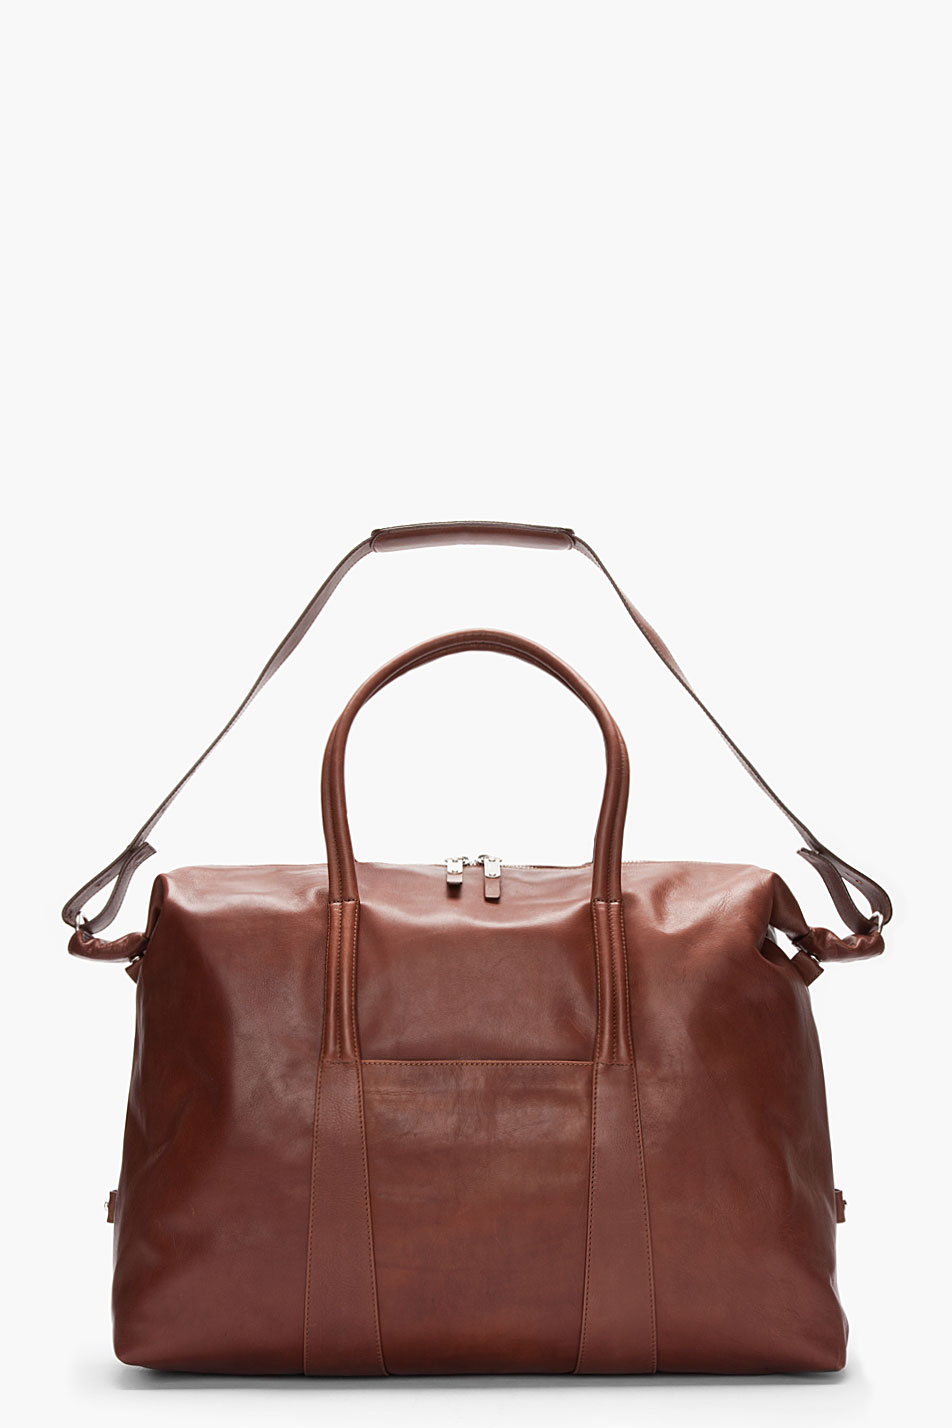 Maison Martin Margiela Brown Leather Travel Duffel Bag Calfskin